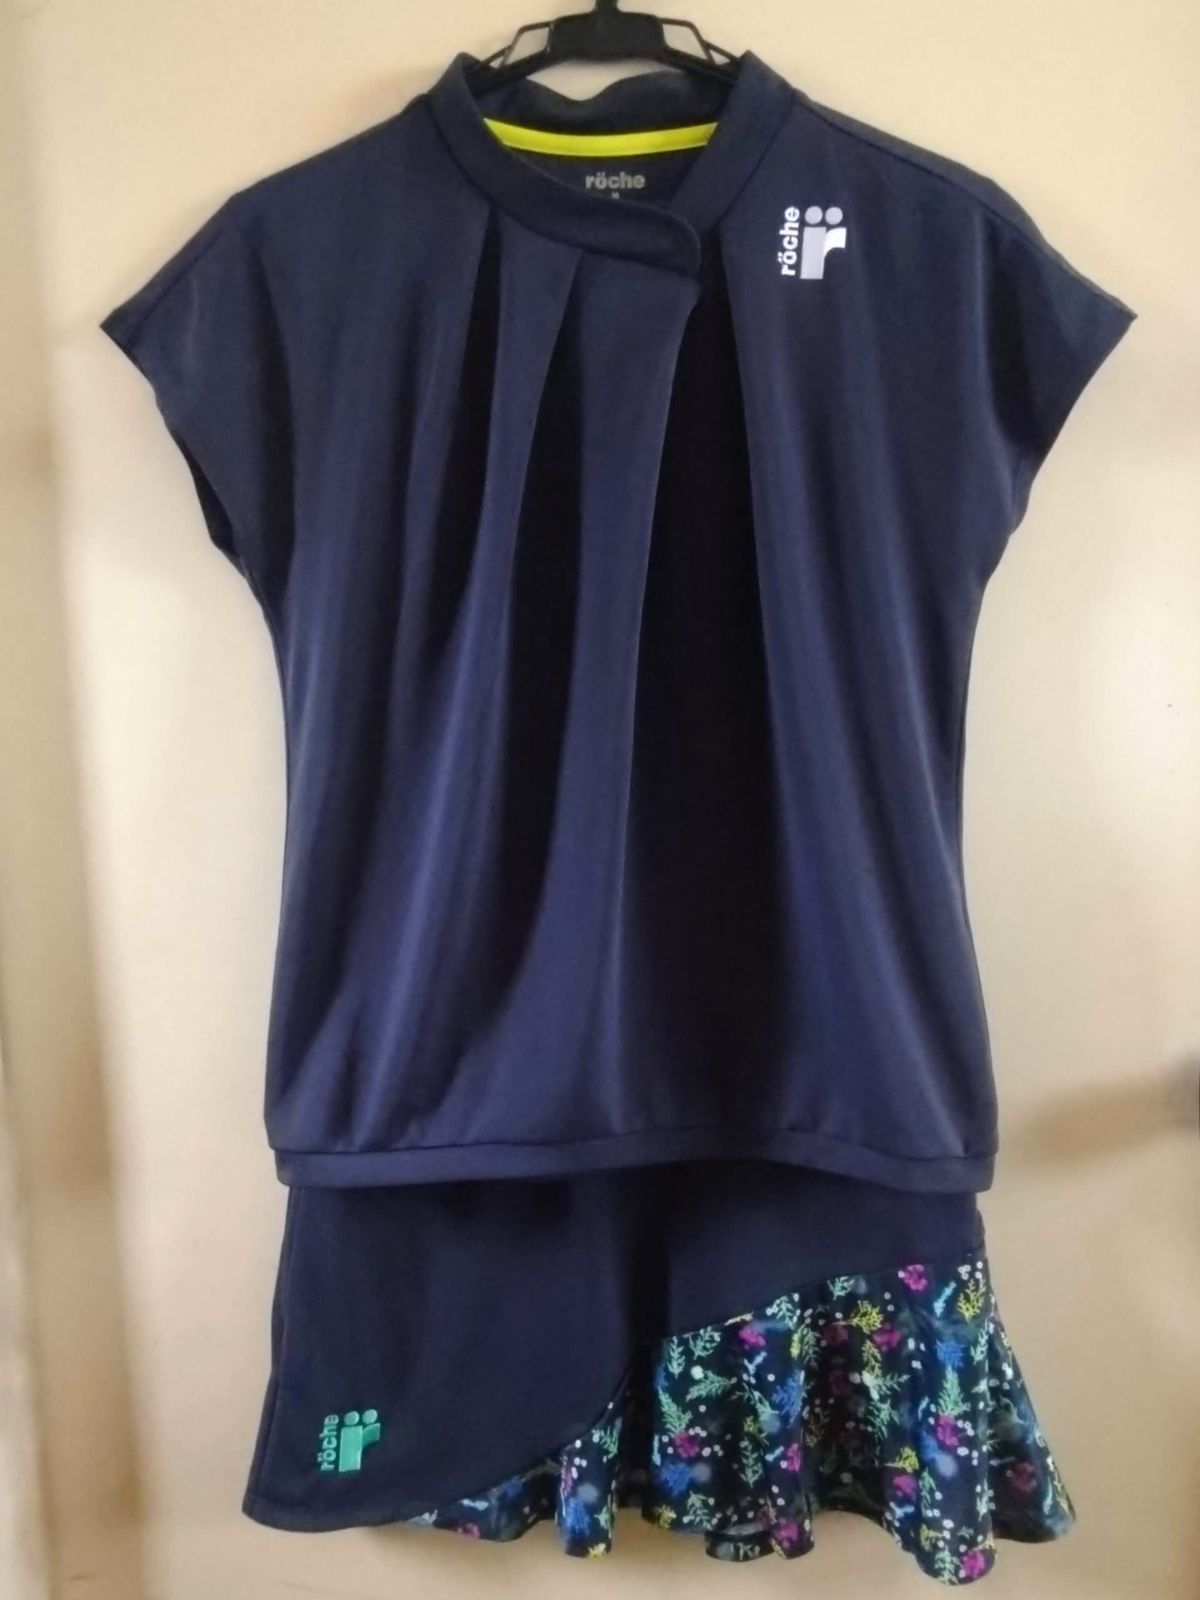 roche ローチェ テニスウェア シャツ スコート 上下セット Mサイズ 新品美品 紺 花柄 - メルカリShops